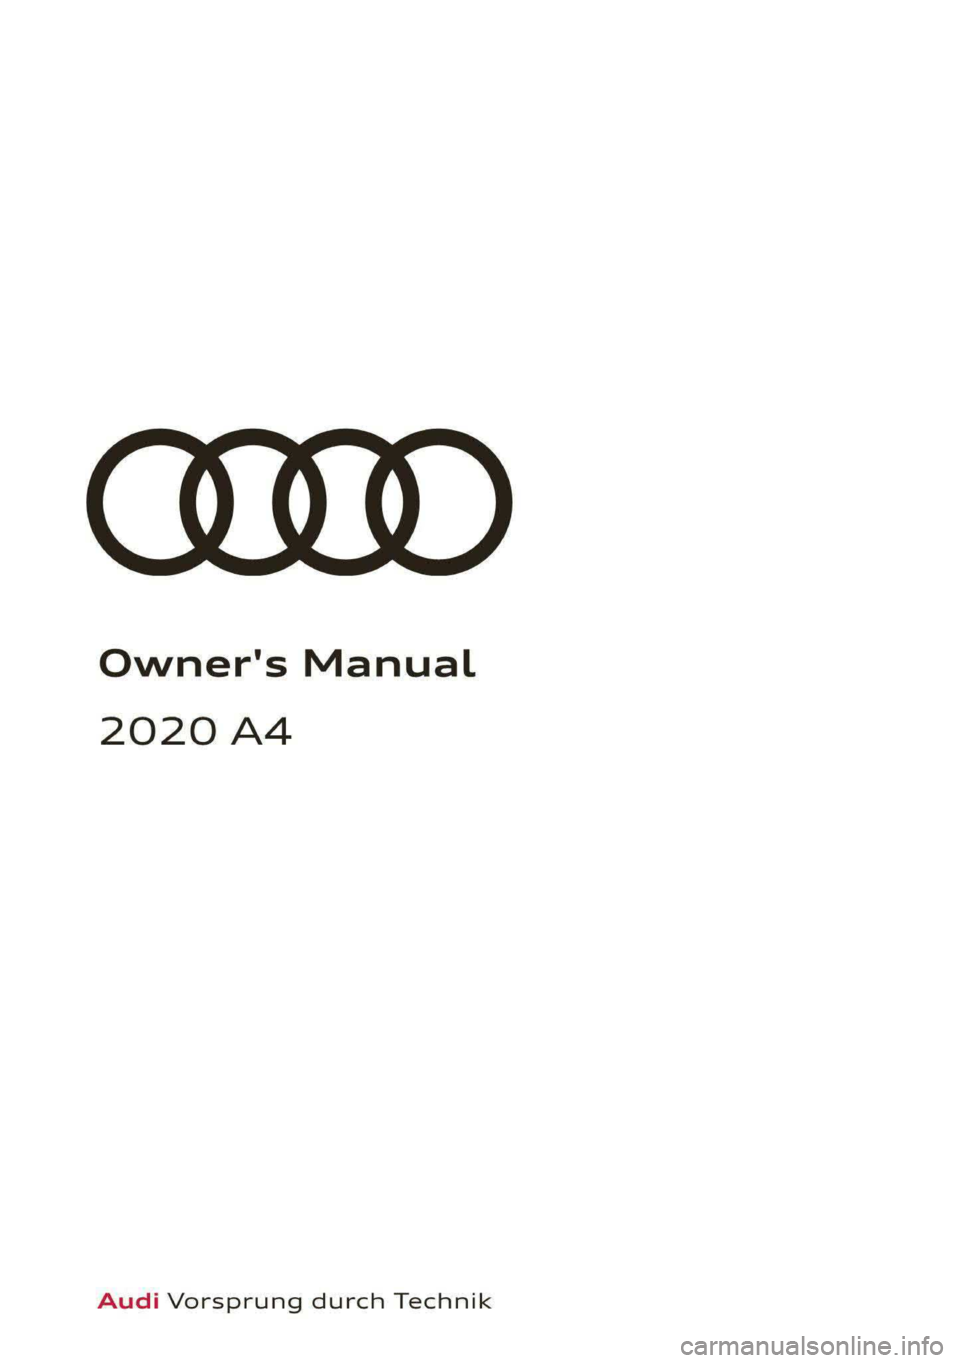 AUDI S4 2020  Owners Manual Owner's Manual 
2020 A4 
Audi Vorsprung durch Technik  